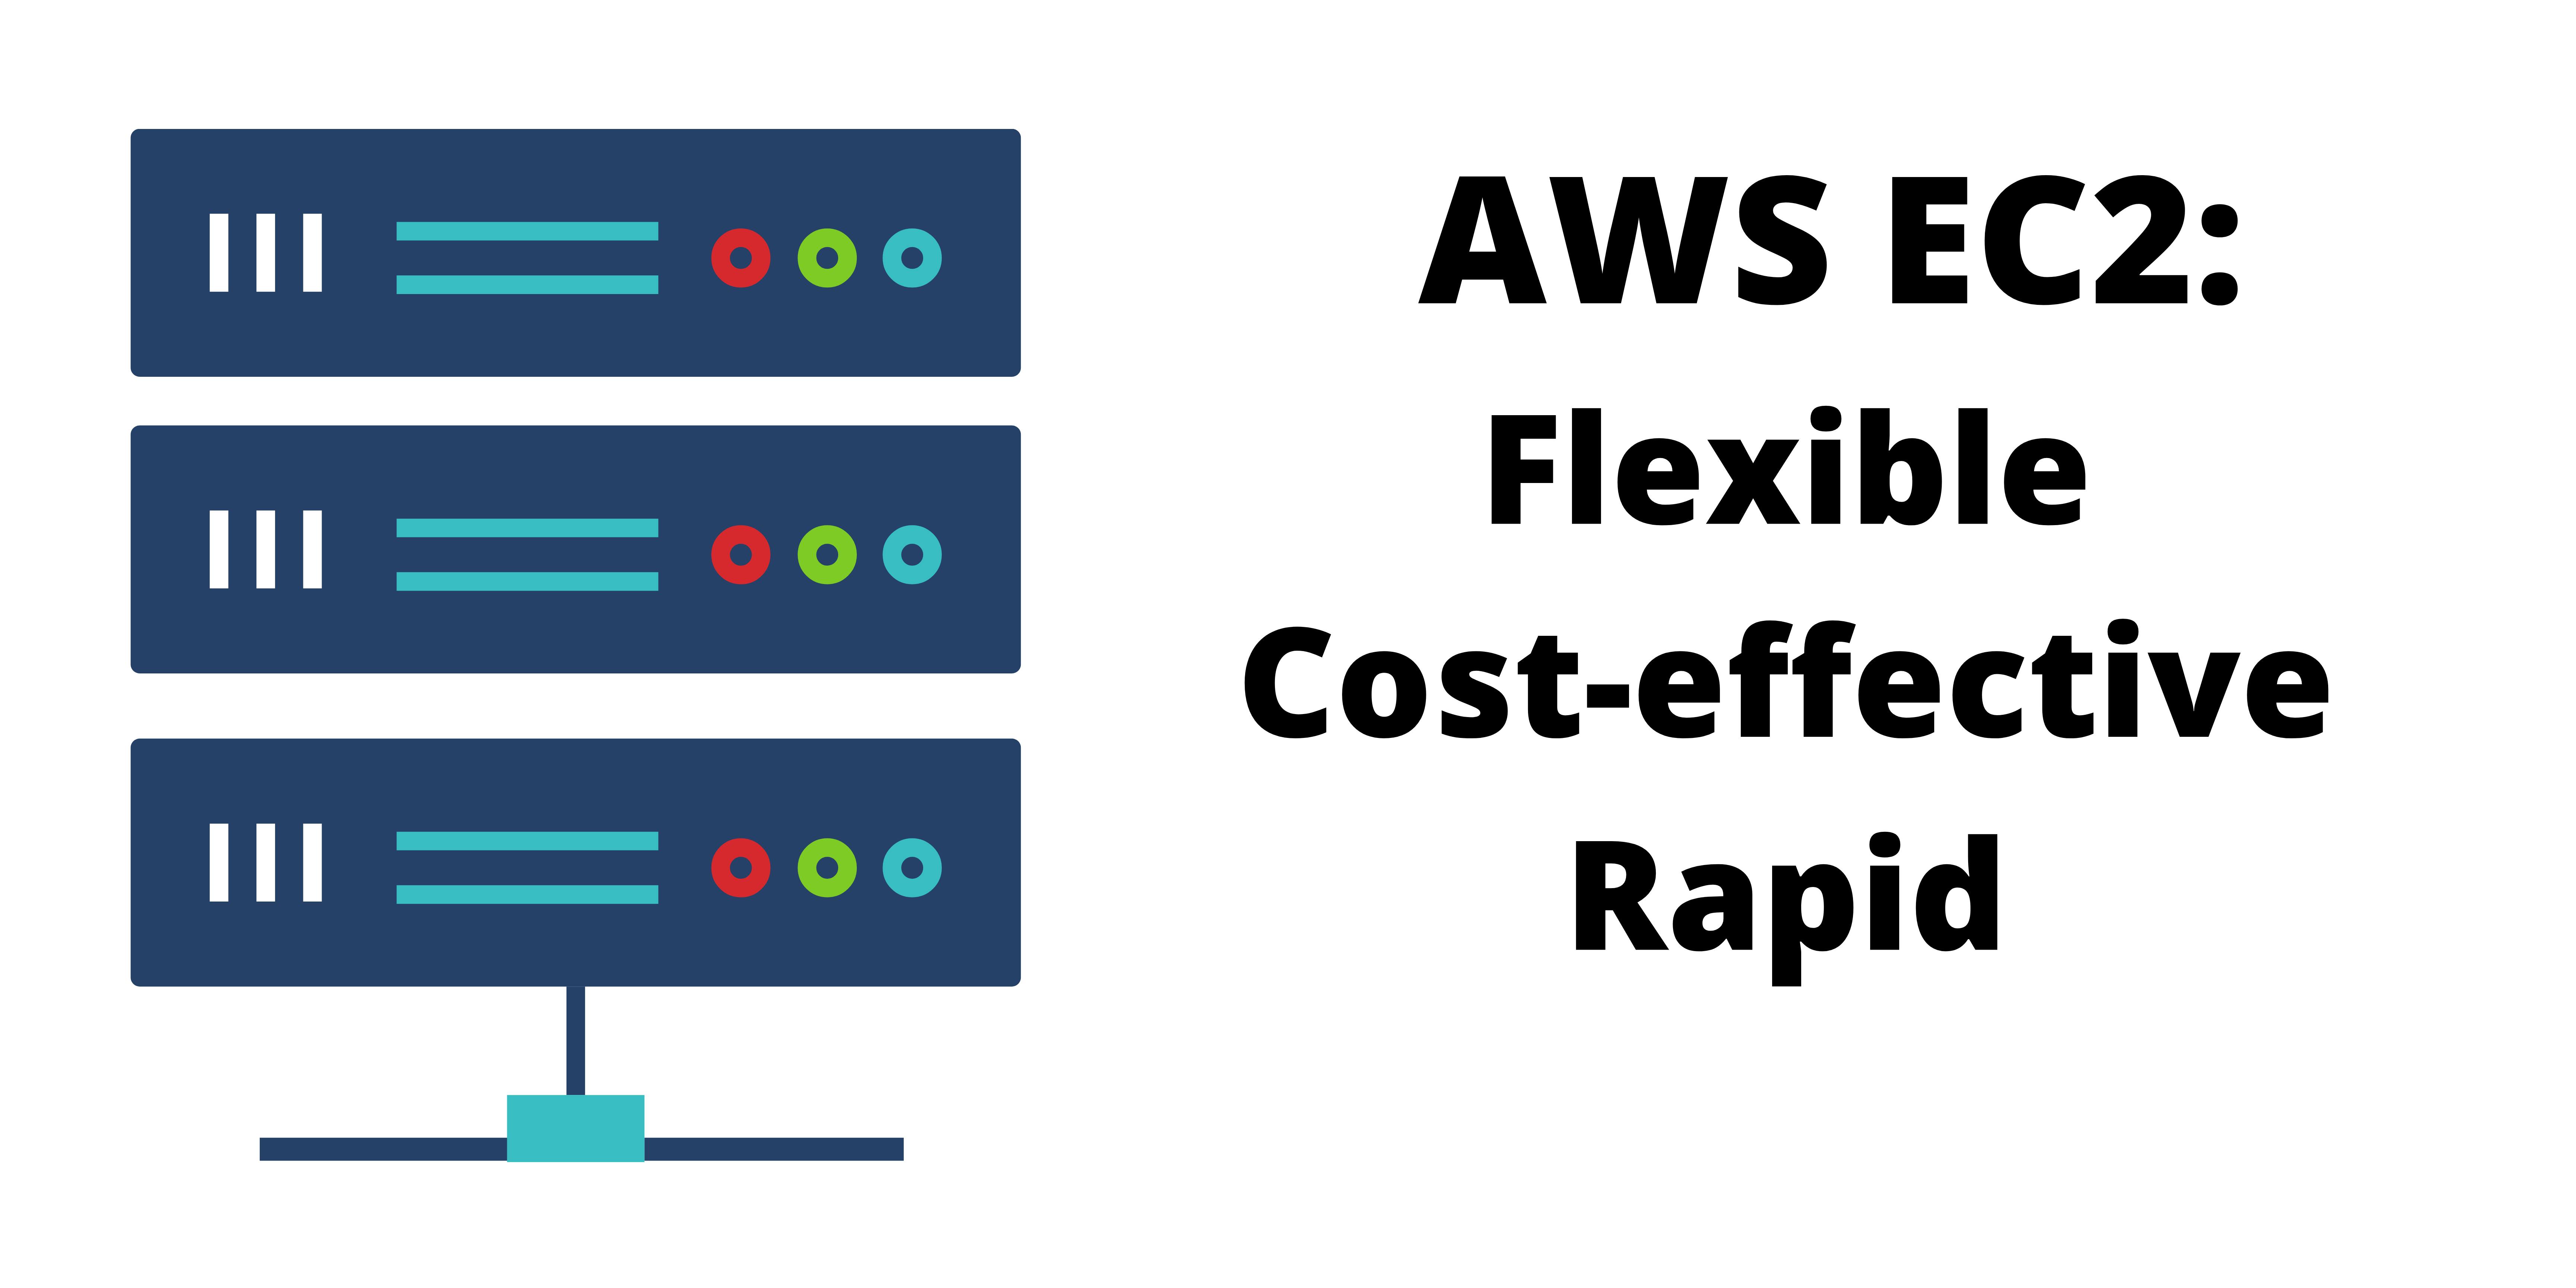 AWS EC2 Flexible Cost-effective Rapid.png